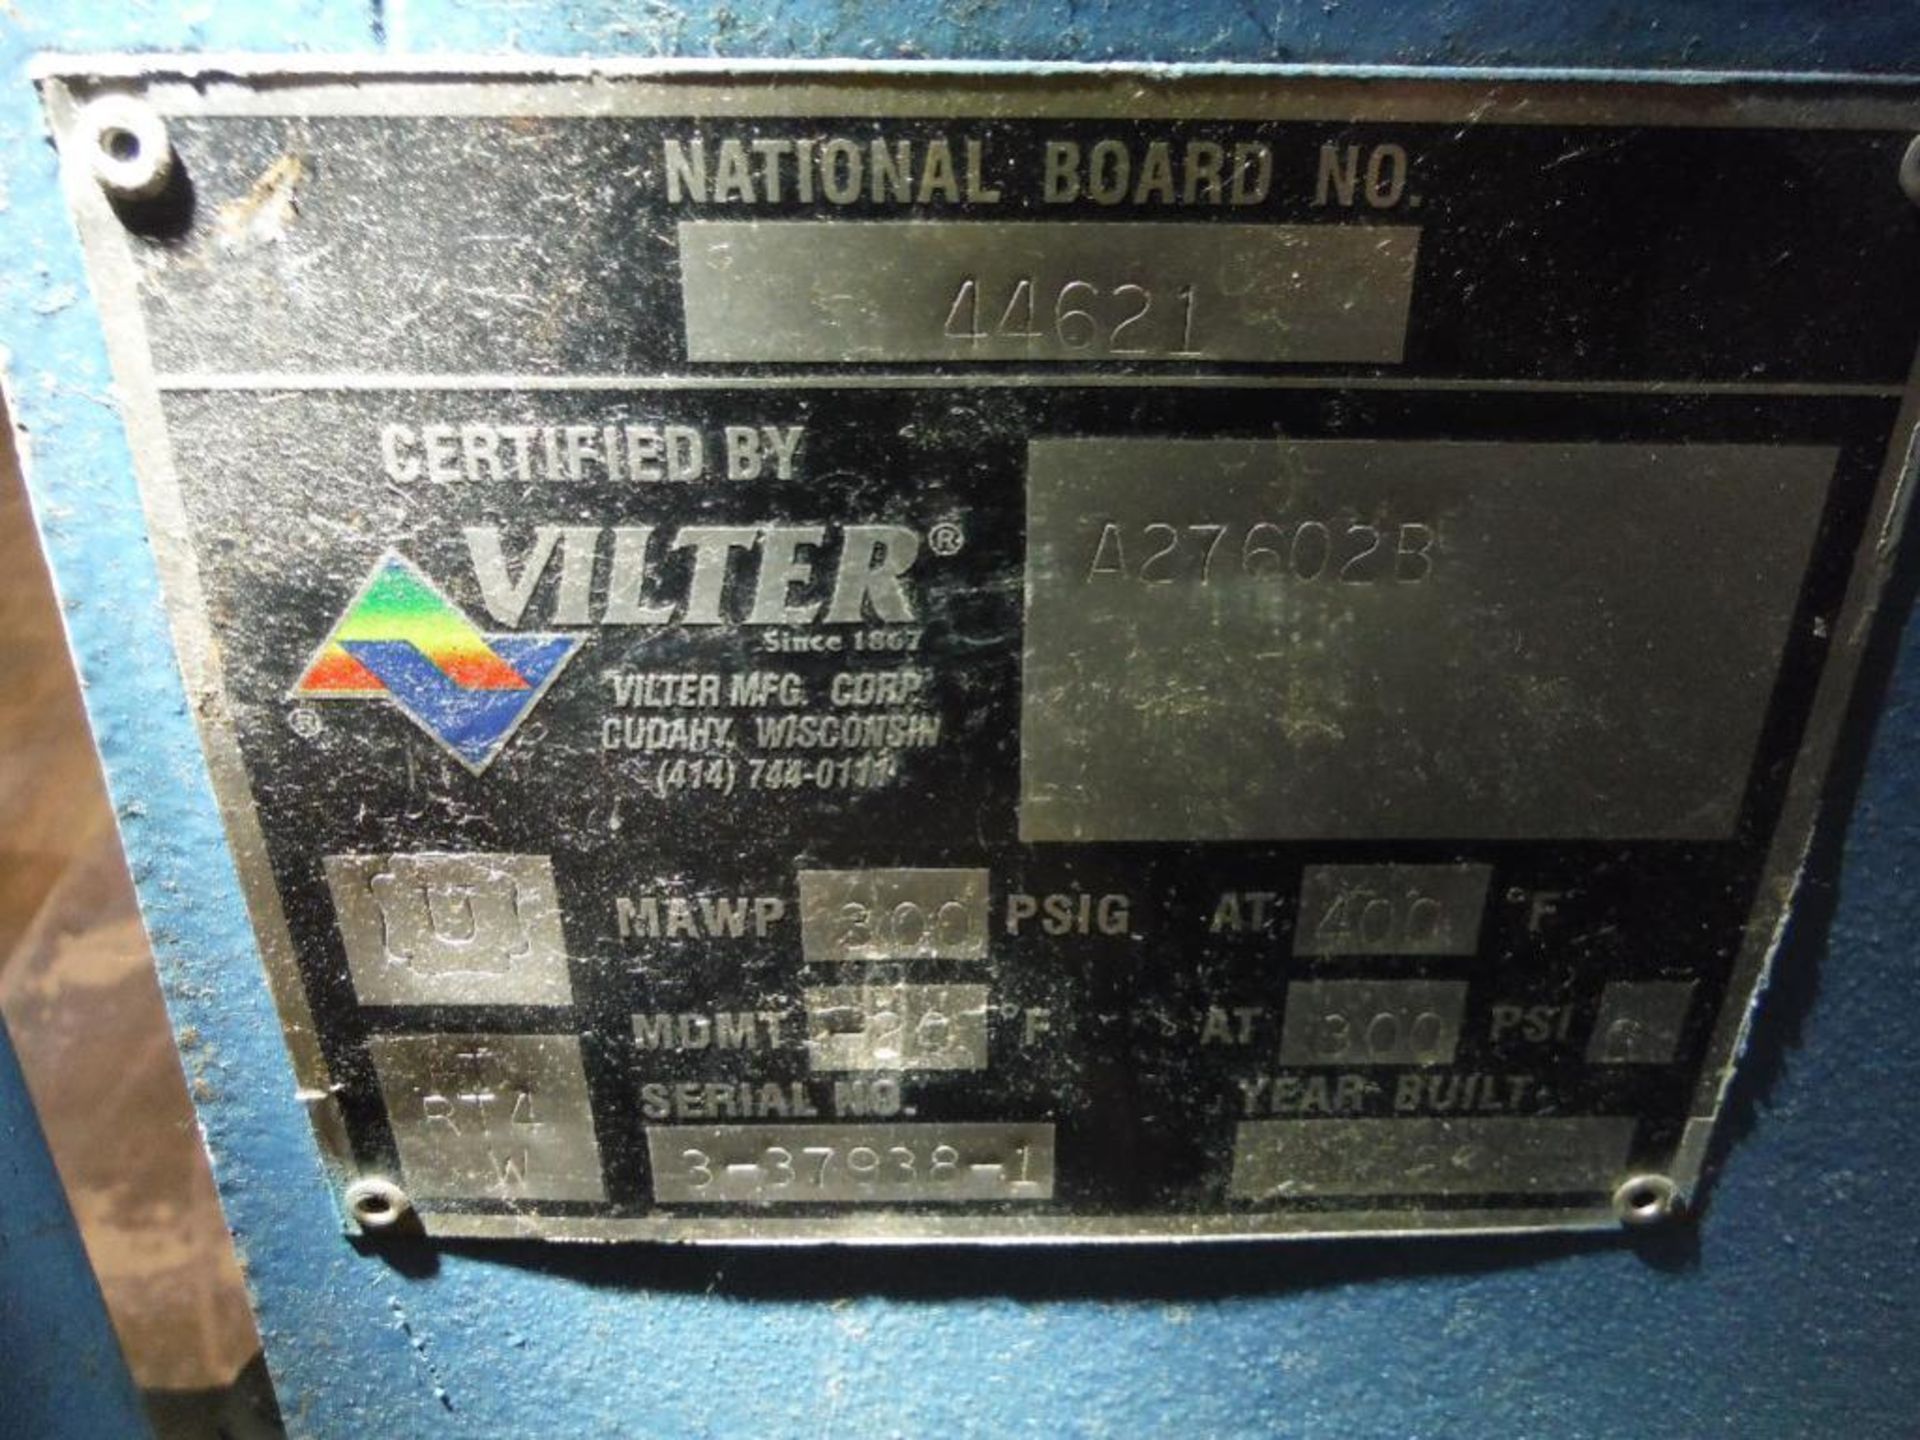 1999 Vilter 500 hp ammonia screw compressor, Model A27602B, SN 3-37938-1, 300 psi @400 F, compressor - Image 12 of 15